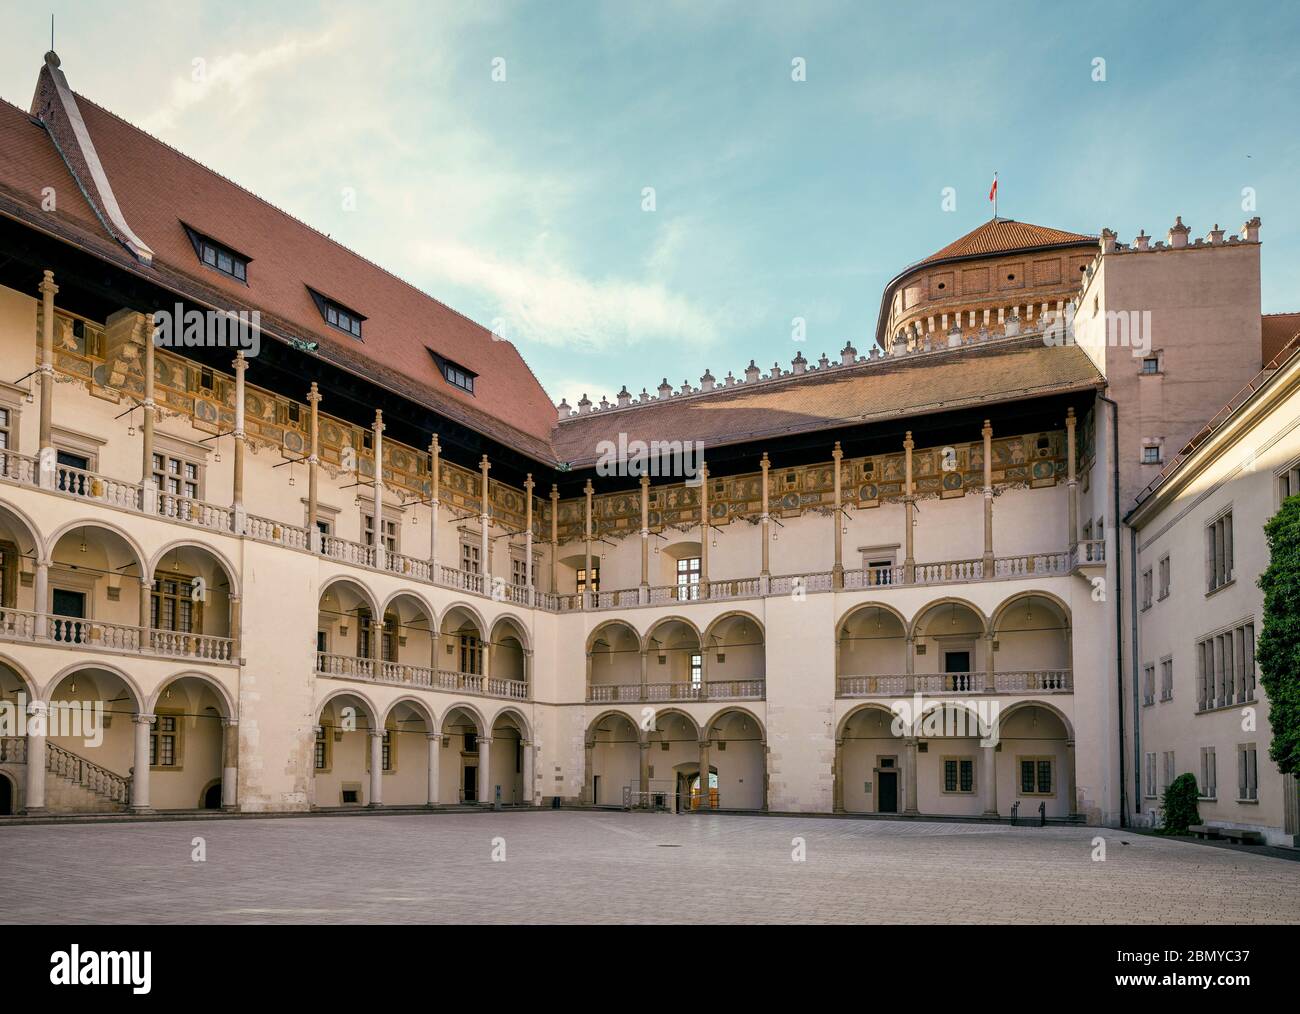 Royal arcade courtyard on Wawel castle in Krakow city, Poland Stock Photo